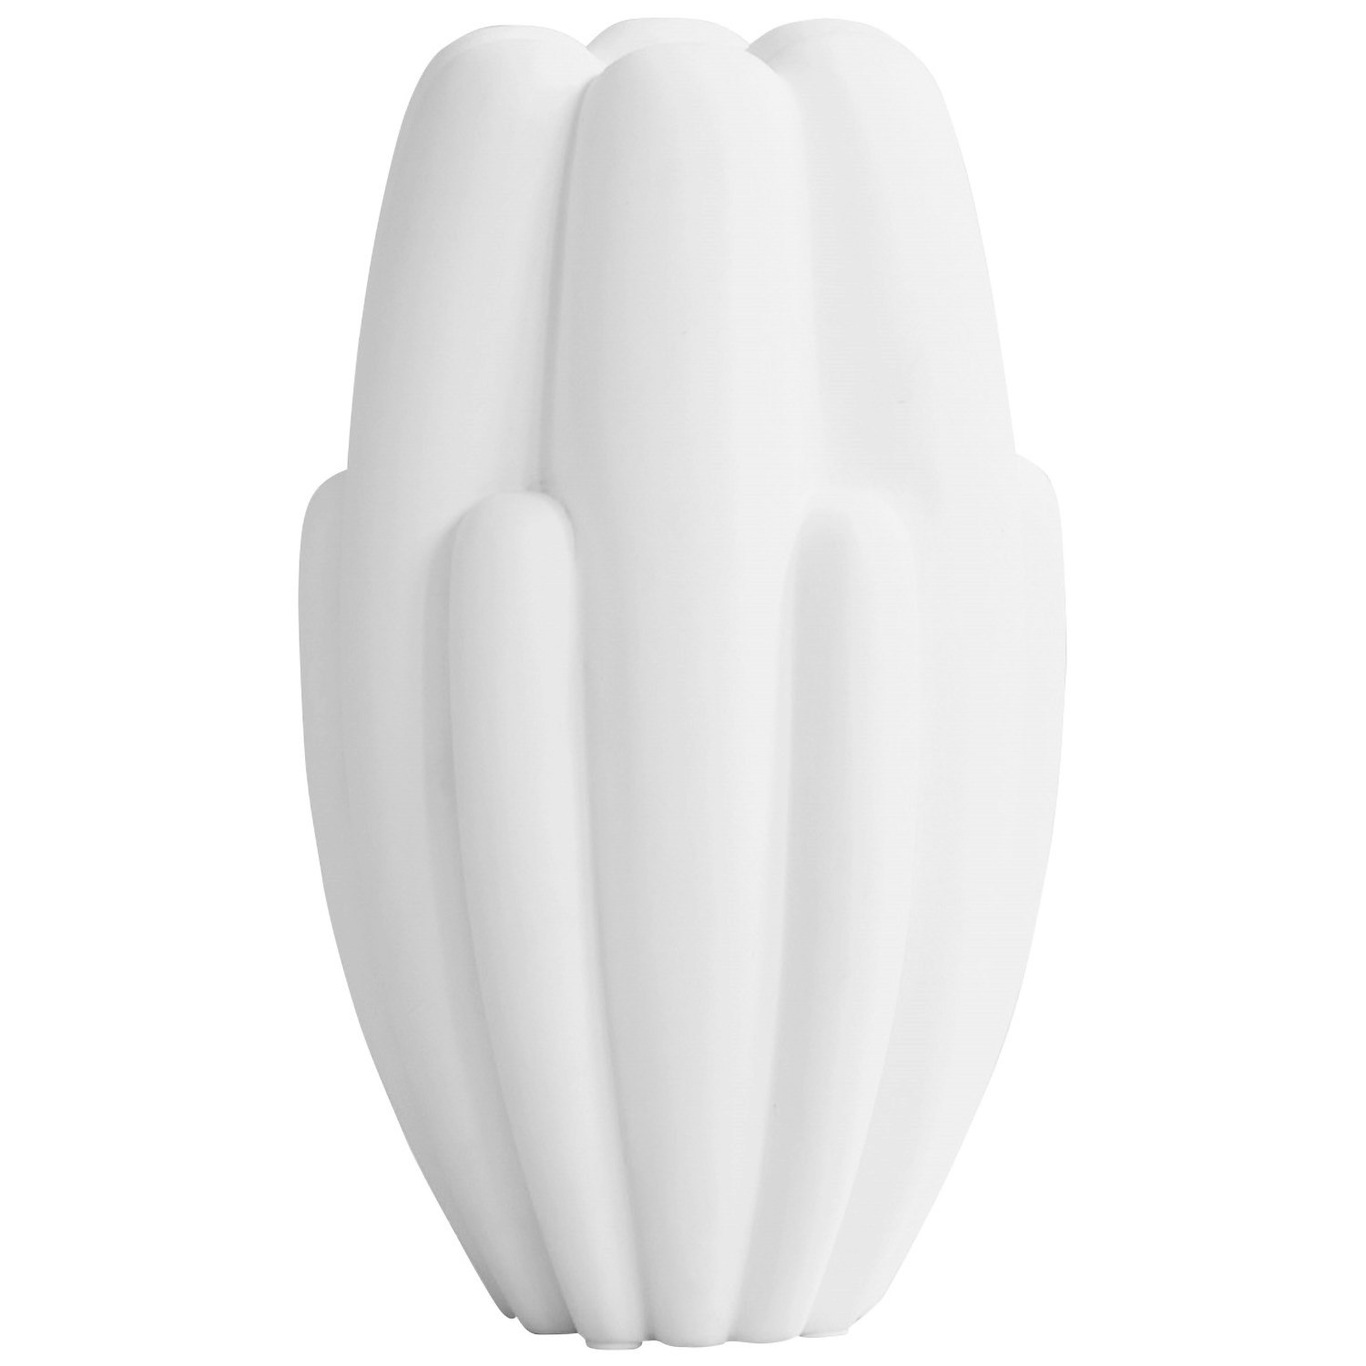 Bloom Slim Vaasi 34 cm, Bone White